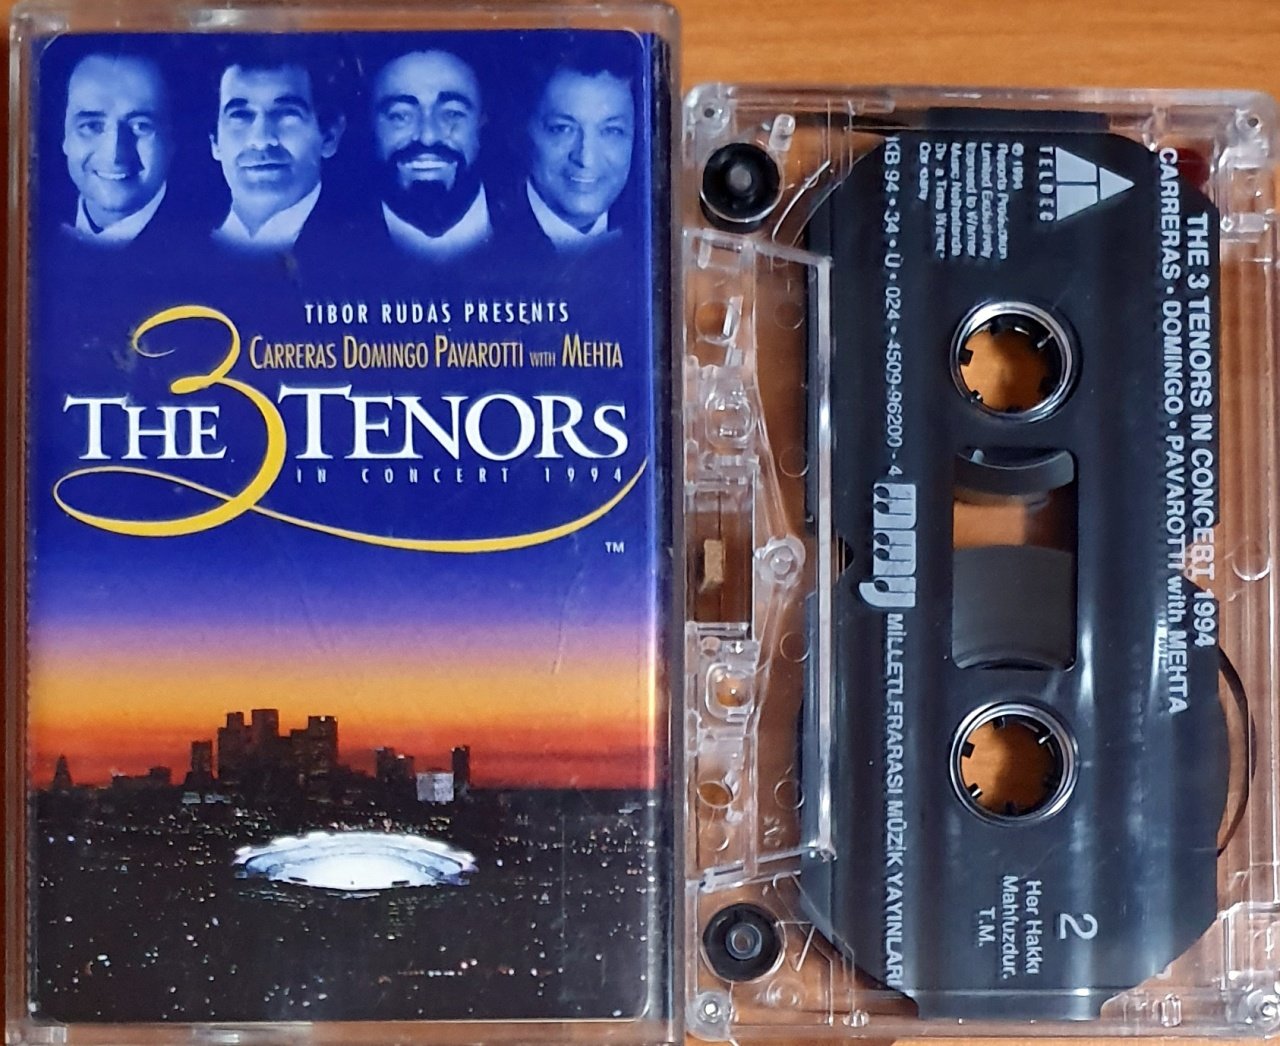 The 3 Tenors In Concert 1994 Carreras Domingo Pavarotti Mehta